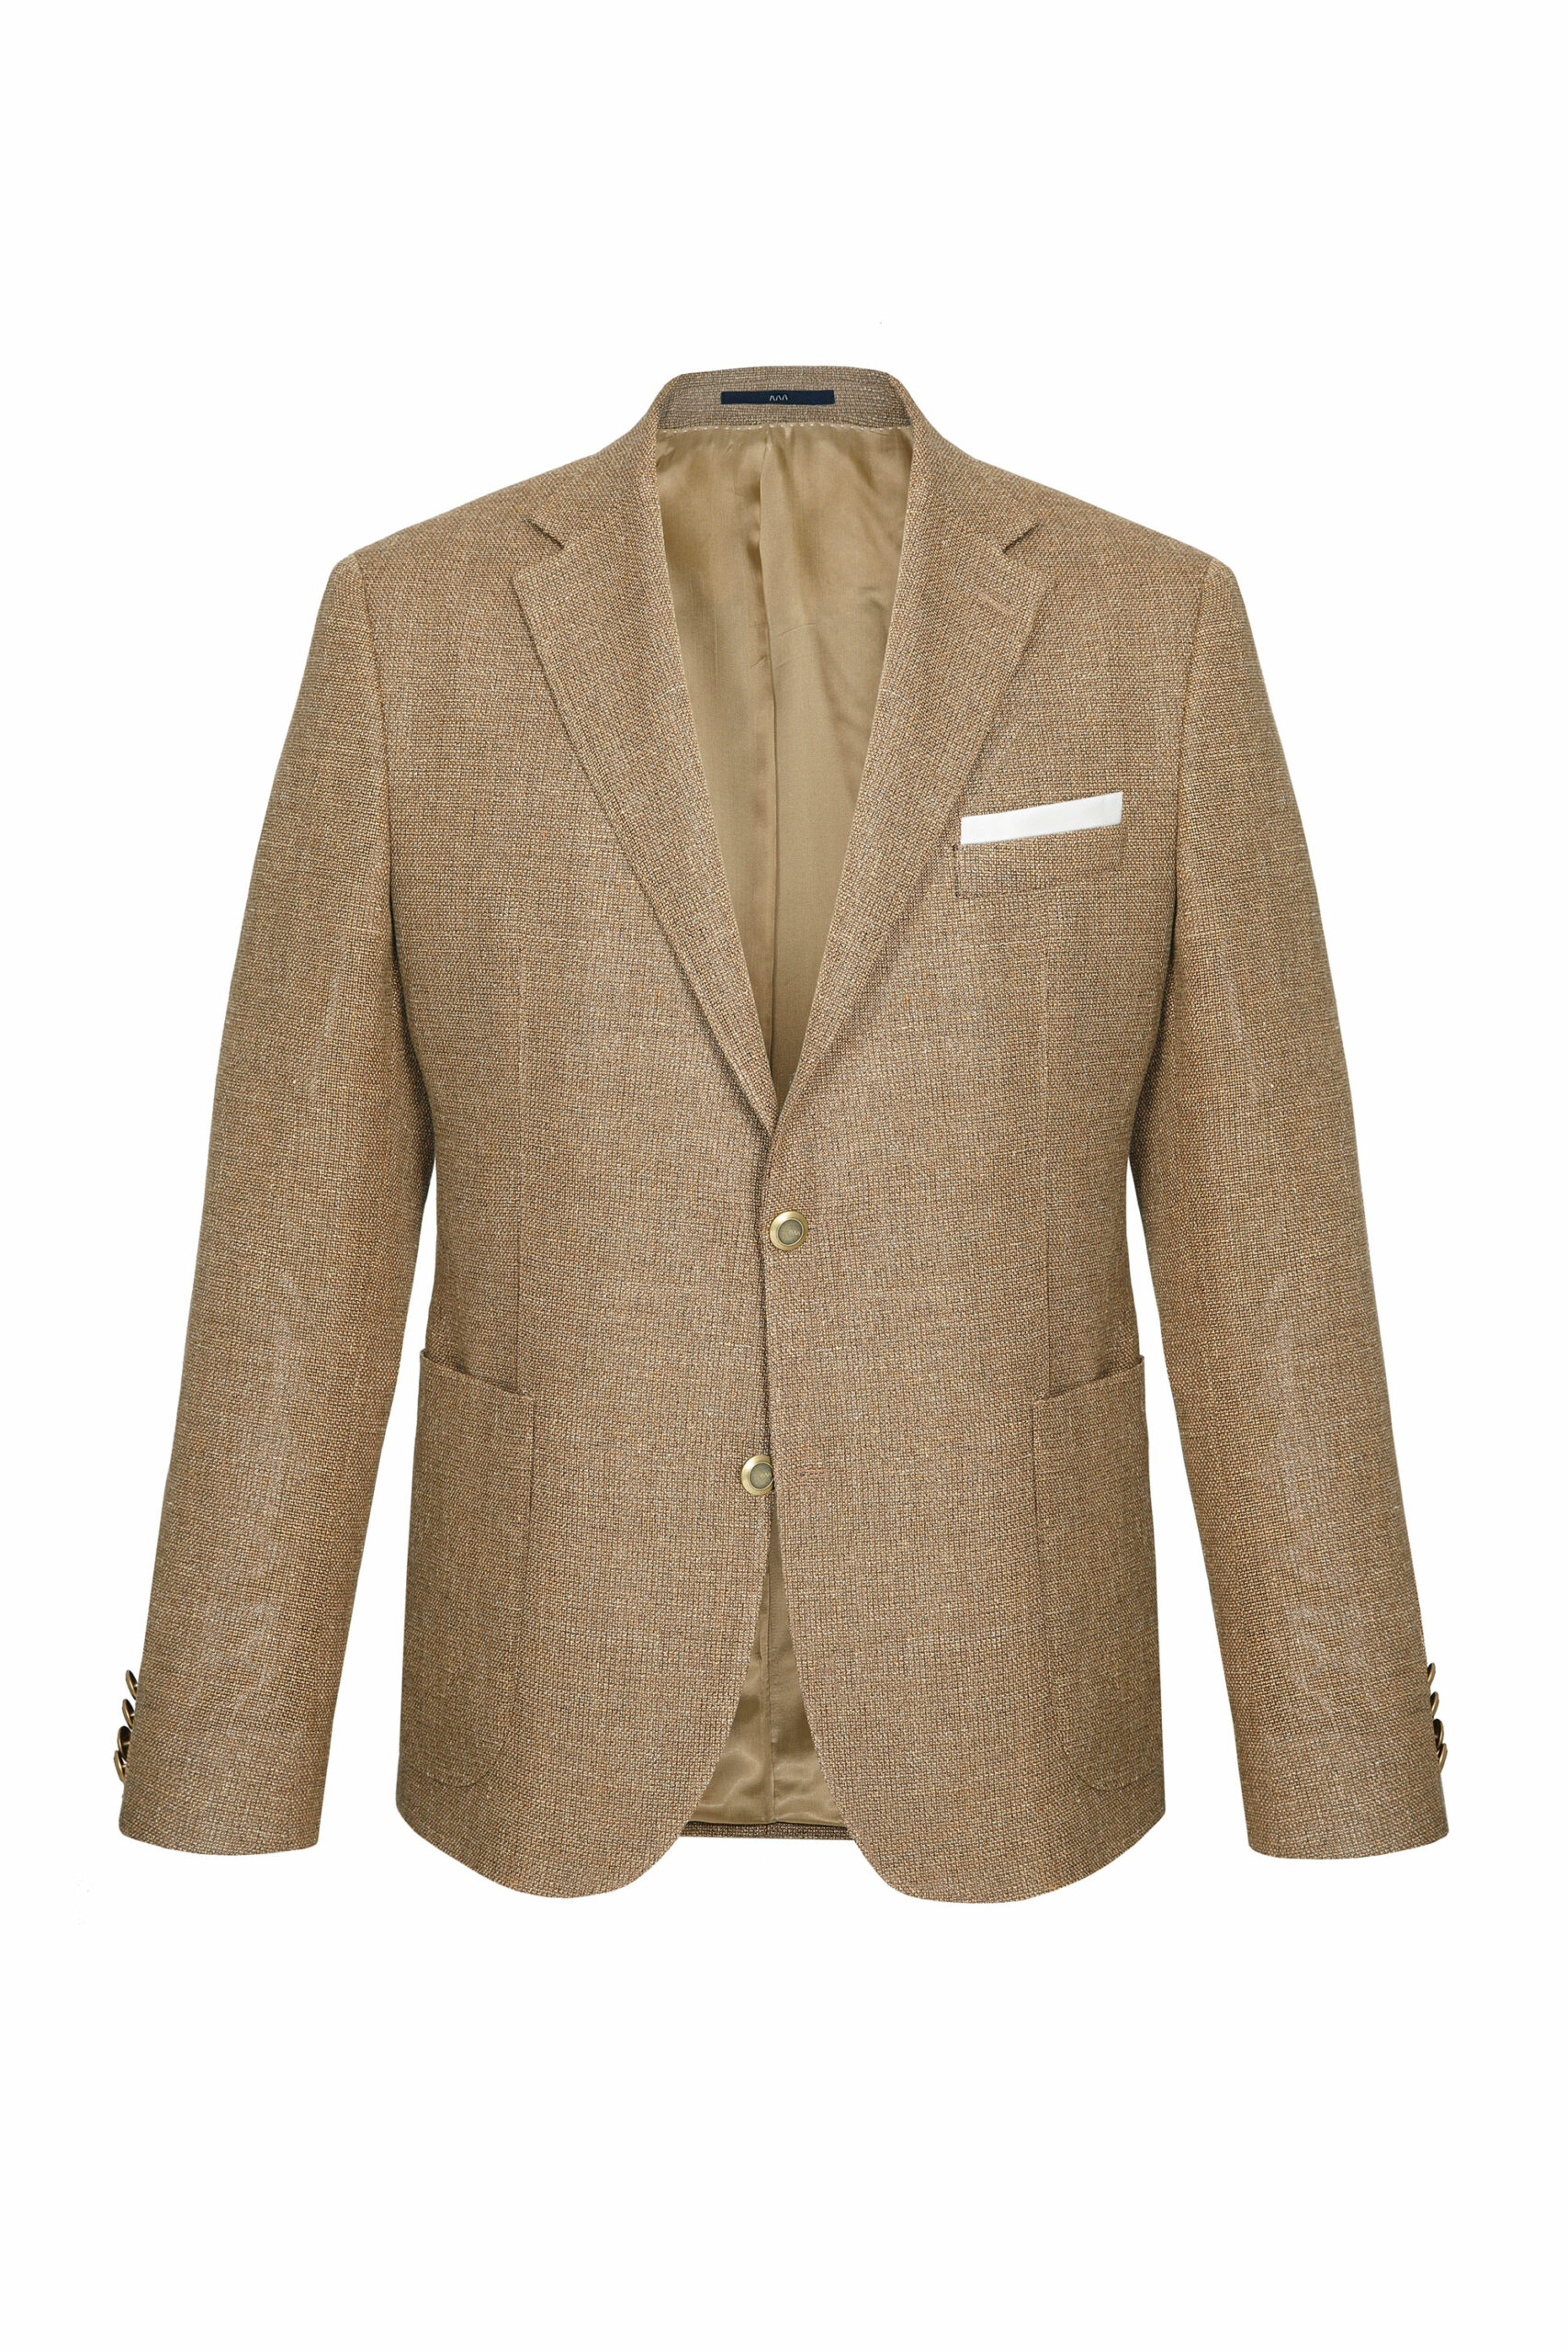 Classic Hopsack jacket made of wool and linen - EDUARD DRESSLER